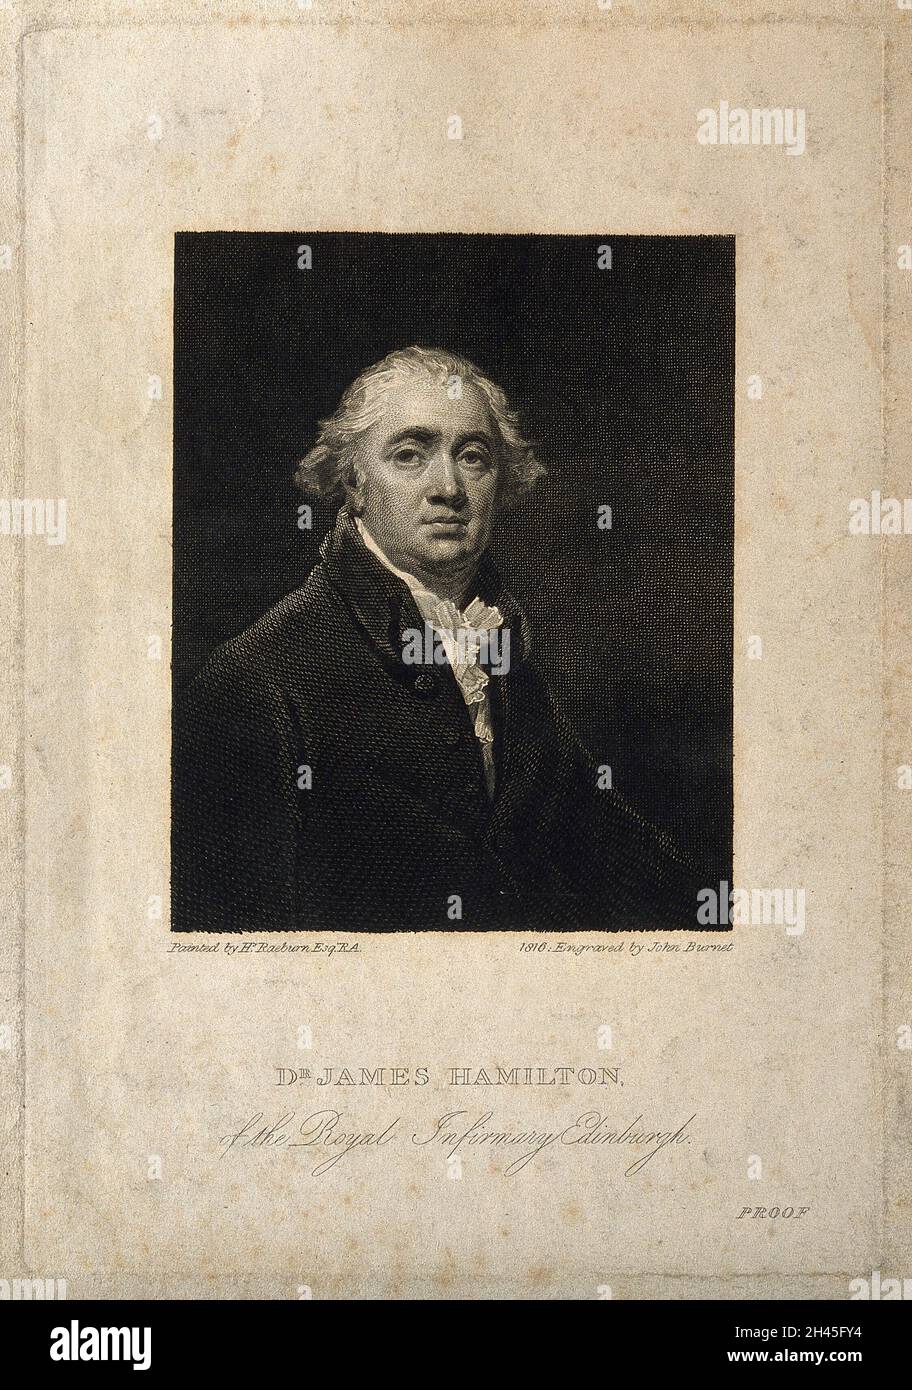 James Hamilton. Line engraving by J. Burnet, 1816, after H. Raeburn. Stock Photo